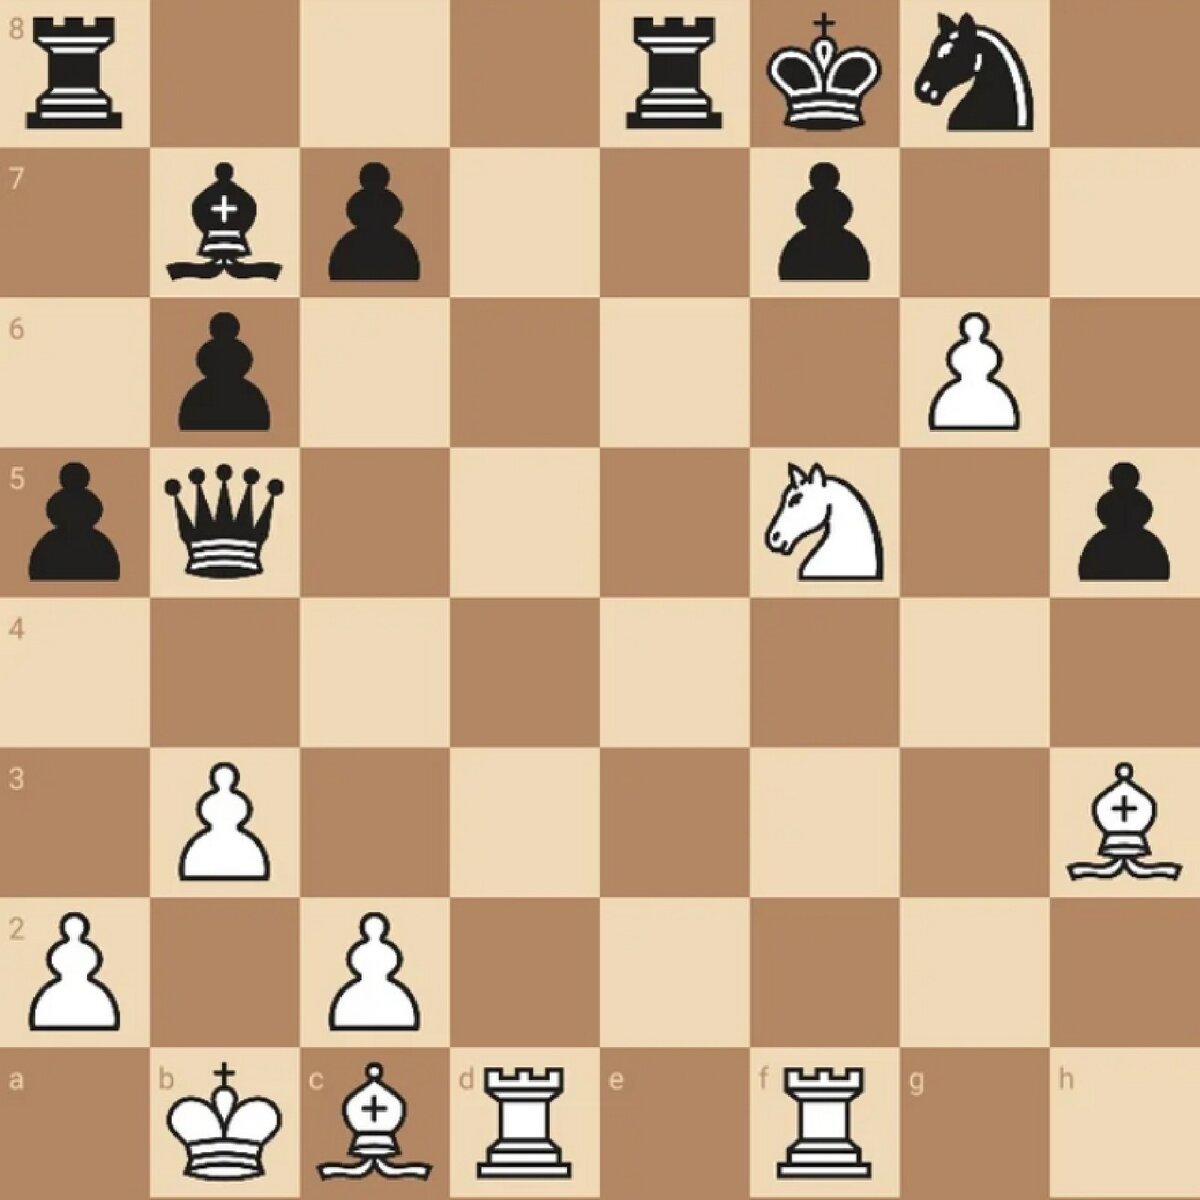 Шахматы Шах и мат в 1 ход